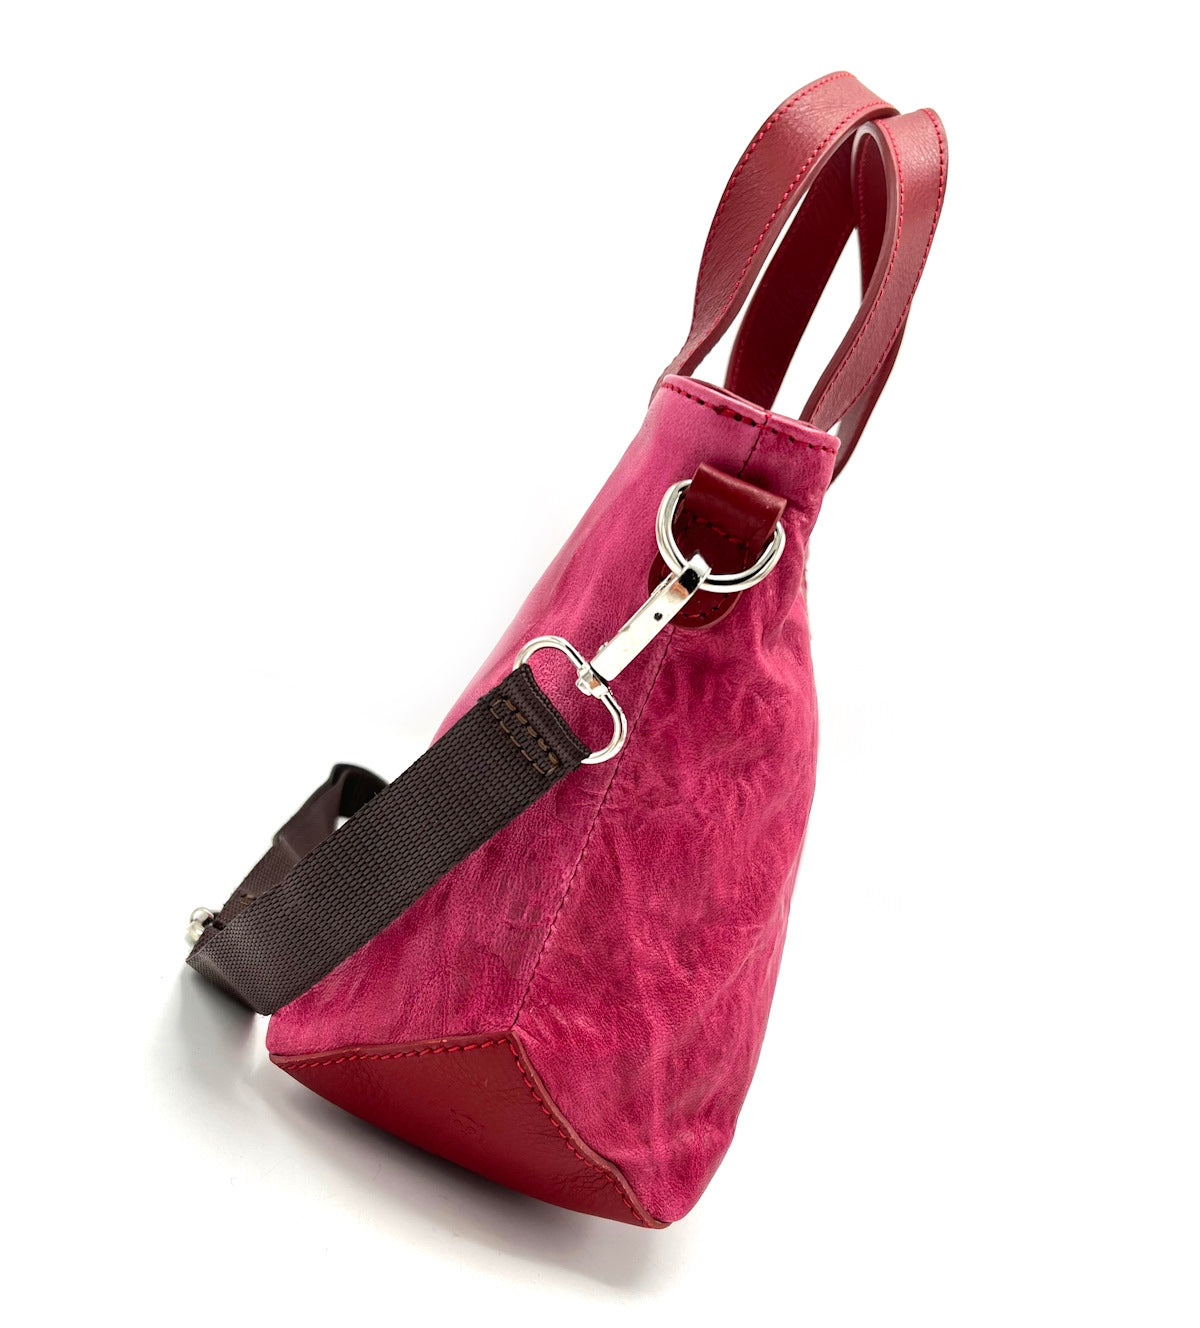 Genuine leather shoulder bag, Made in Italy, art. J803.480